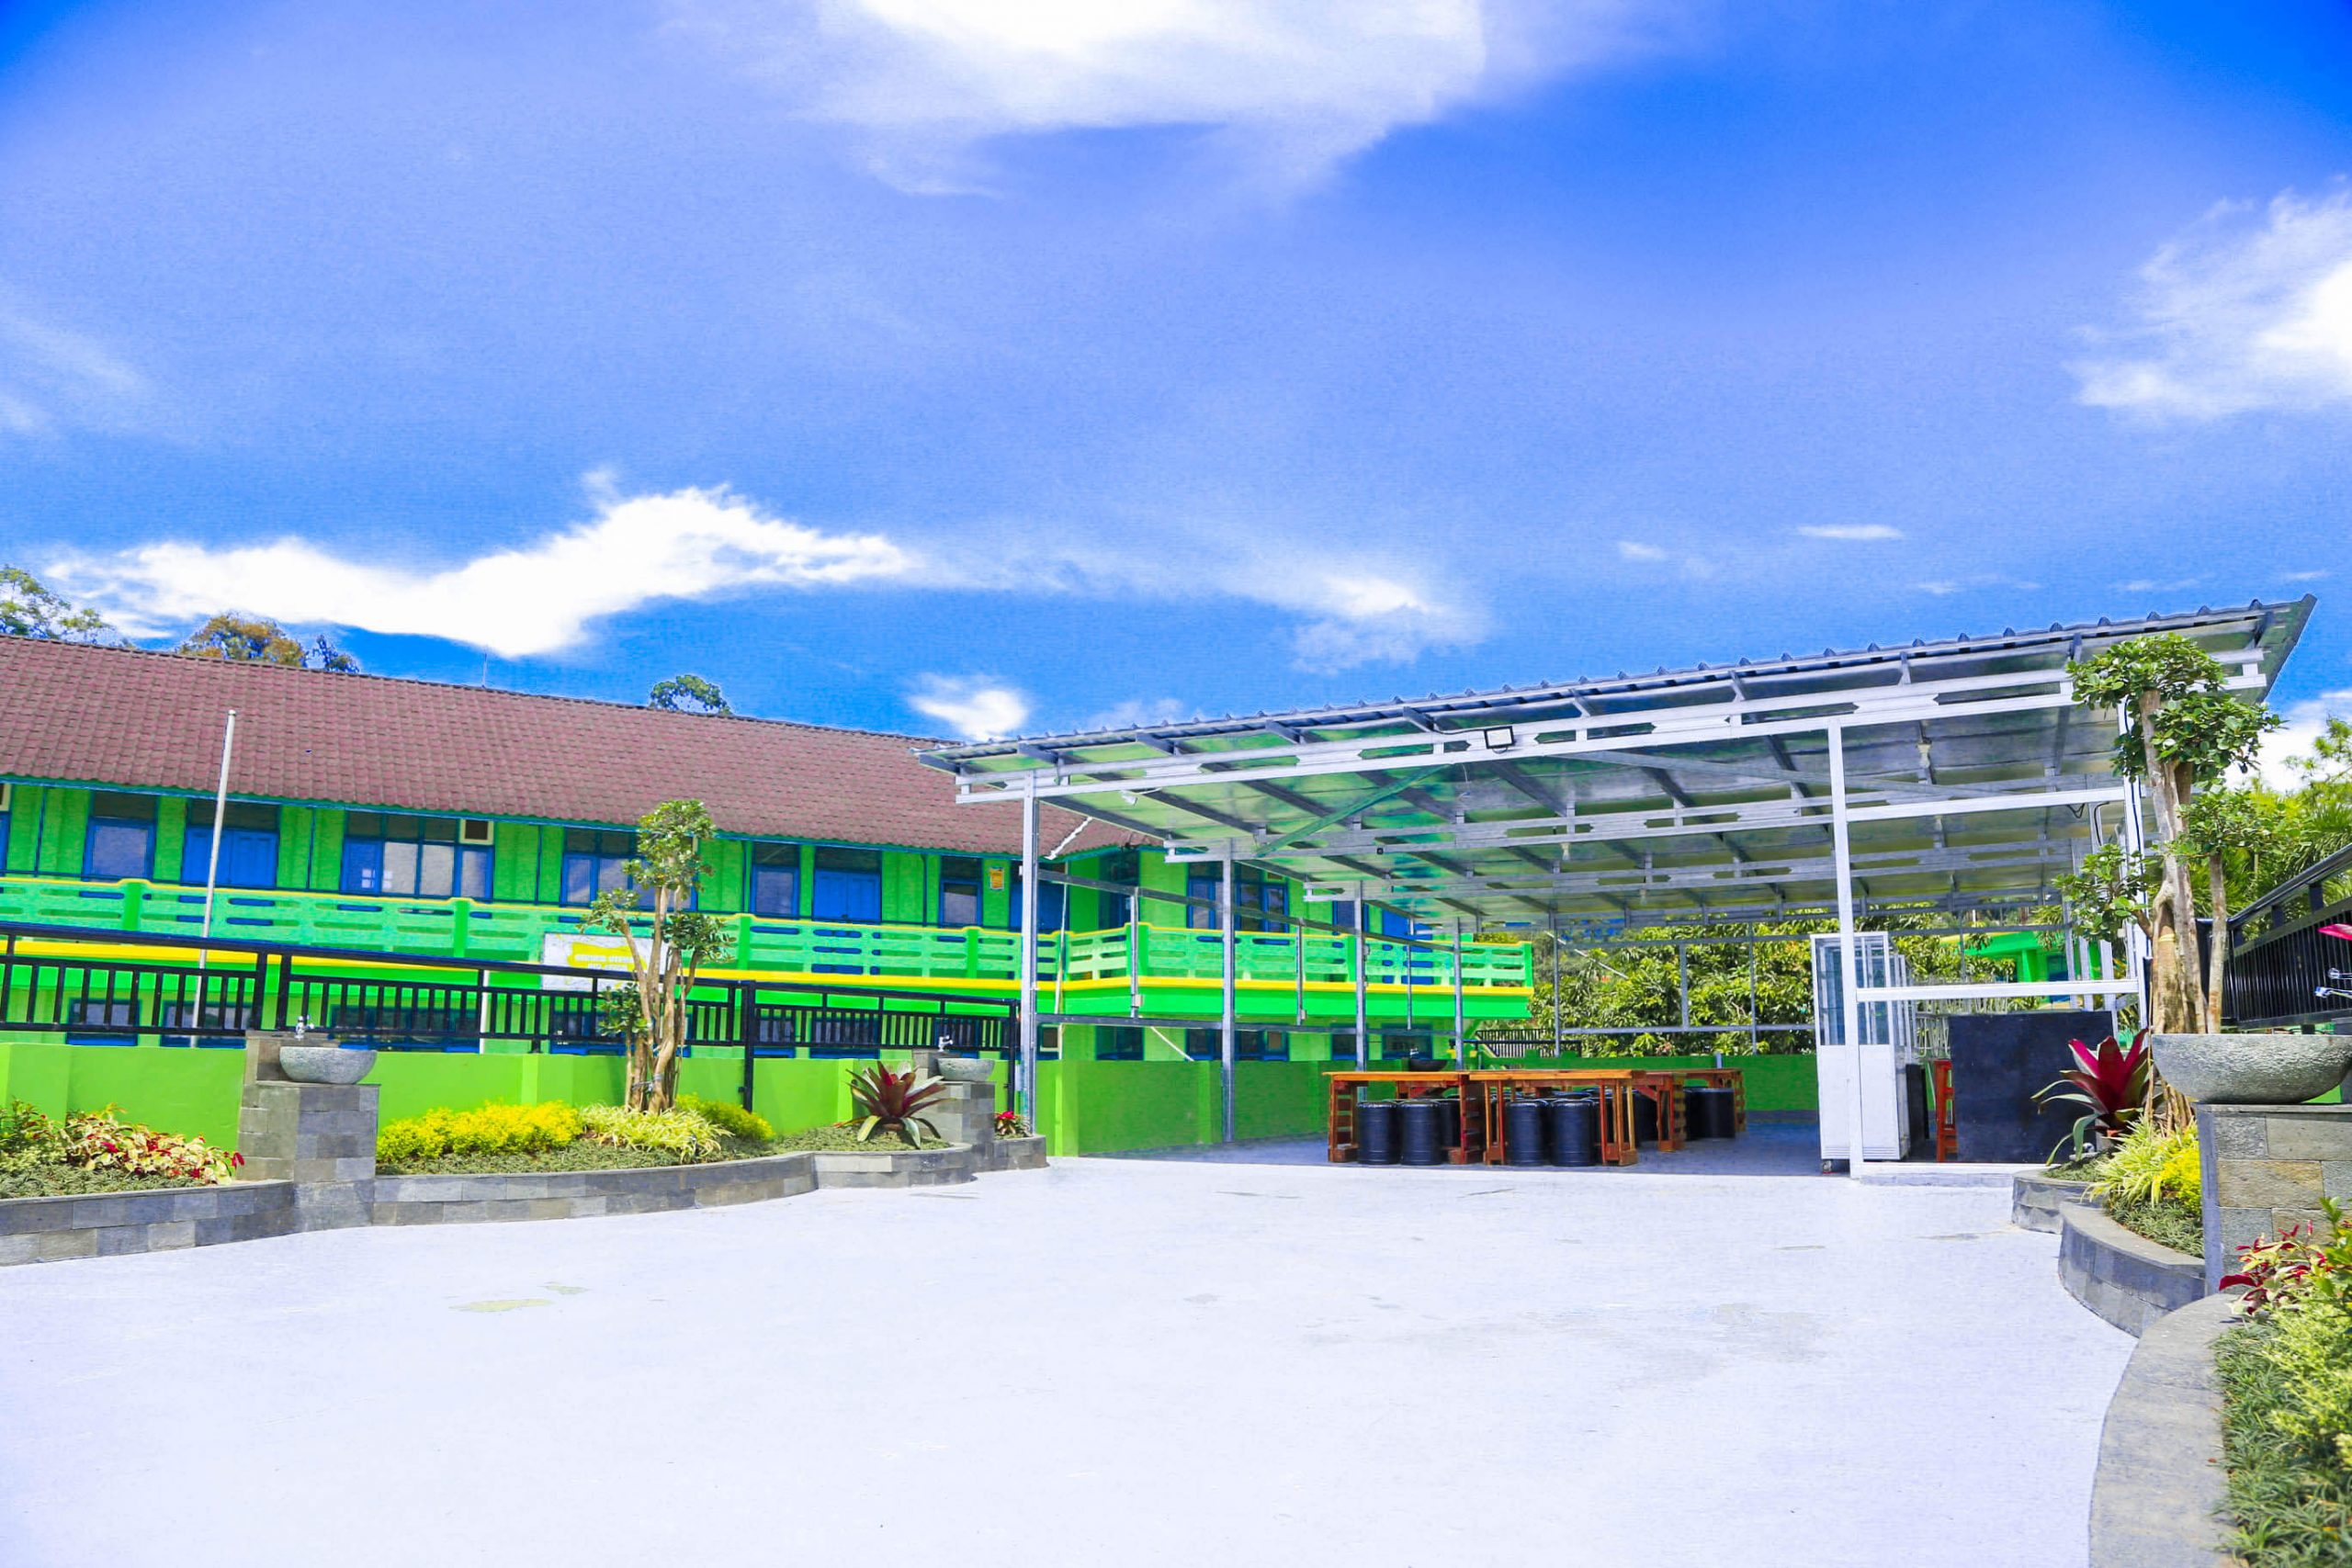 Bingung Mengenai Sekolah? Ini Berbagai Informasi Mengenai SMK Multimedia Terbaik di Bandung!